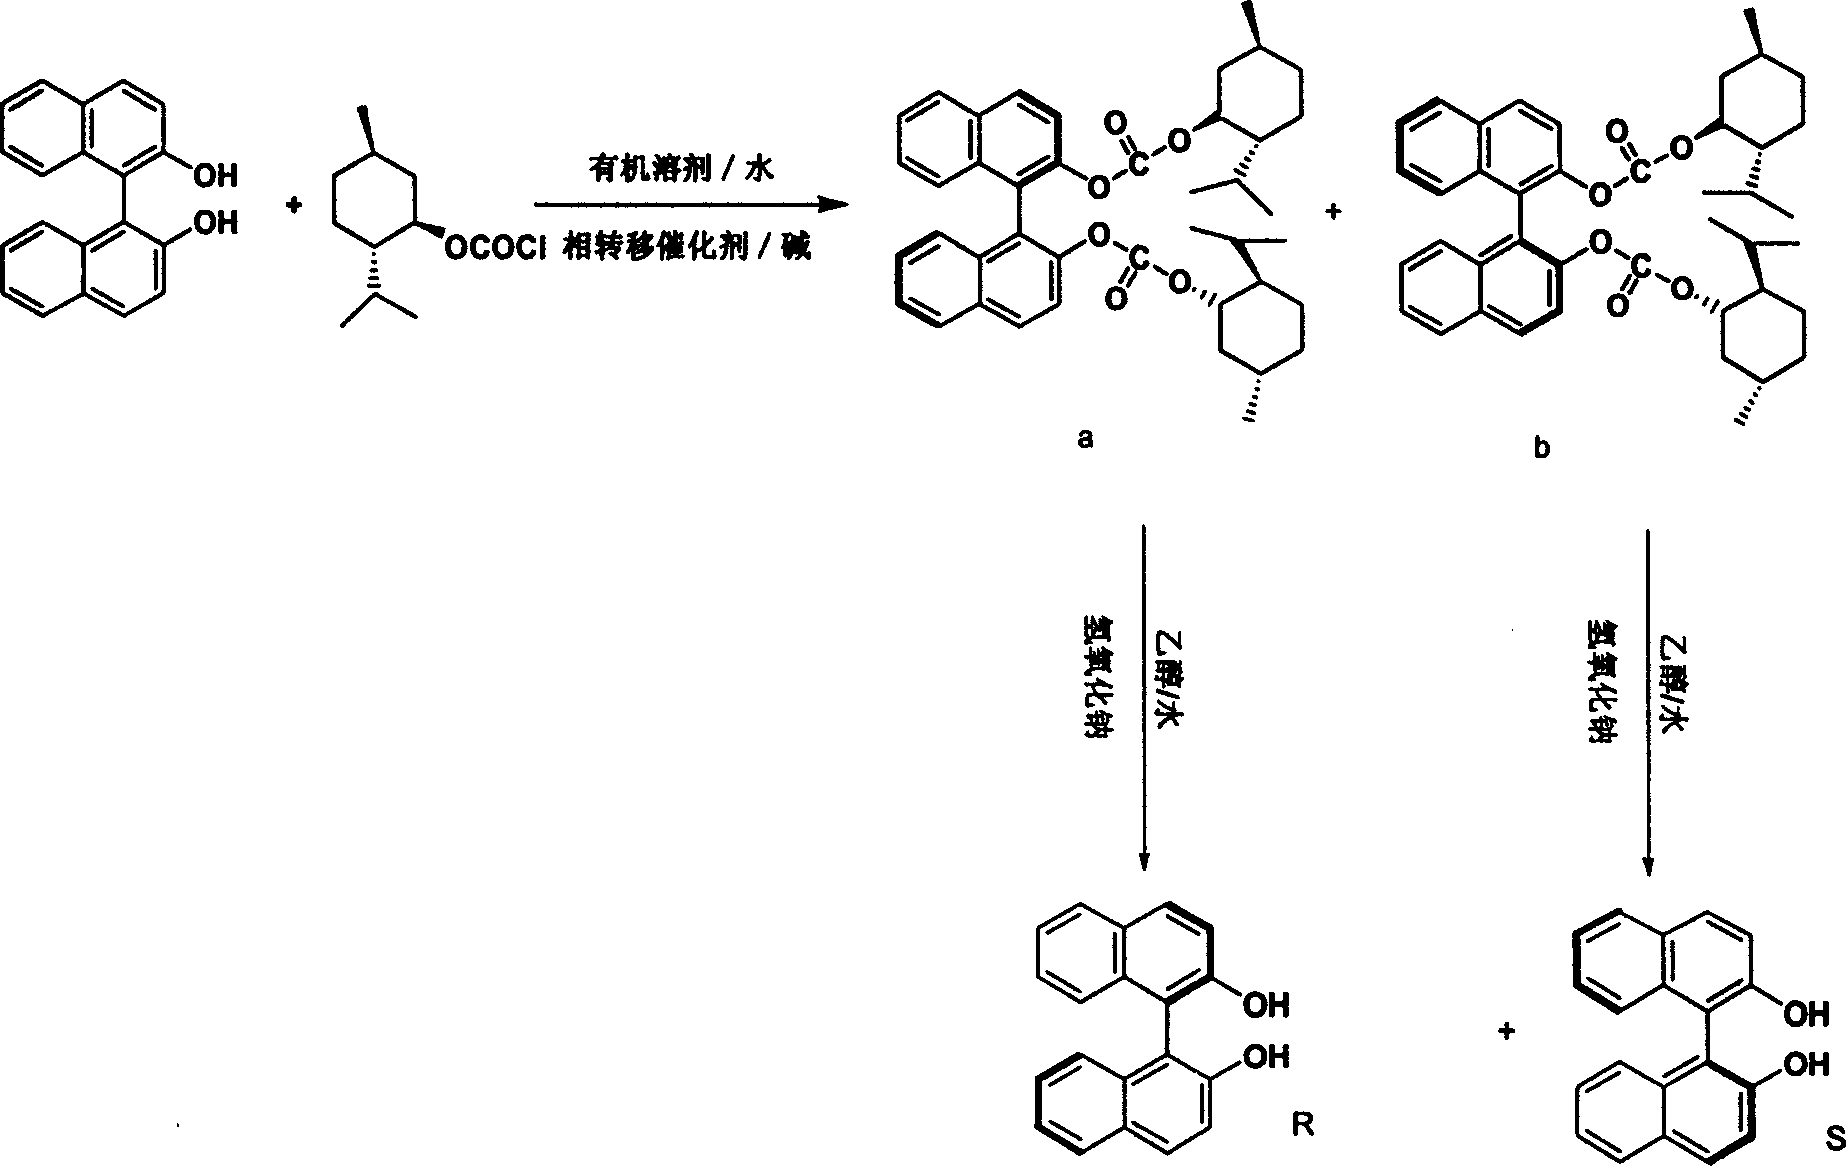 Method for preparing chiral binaphthalene diol